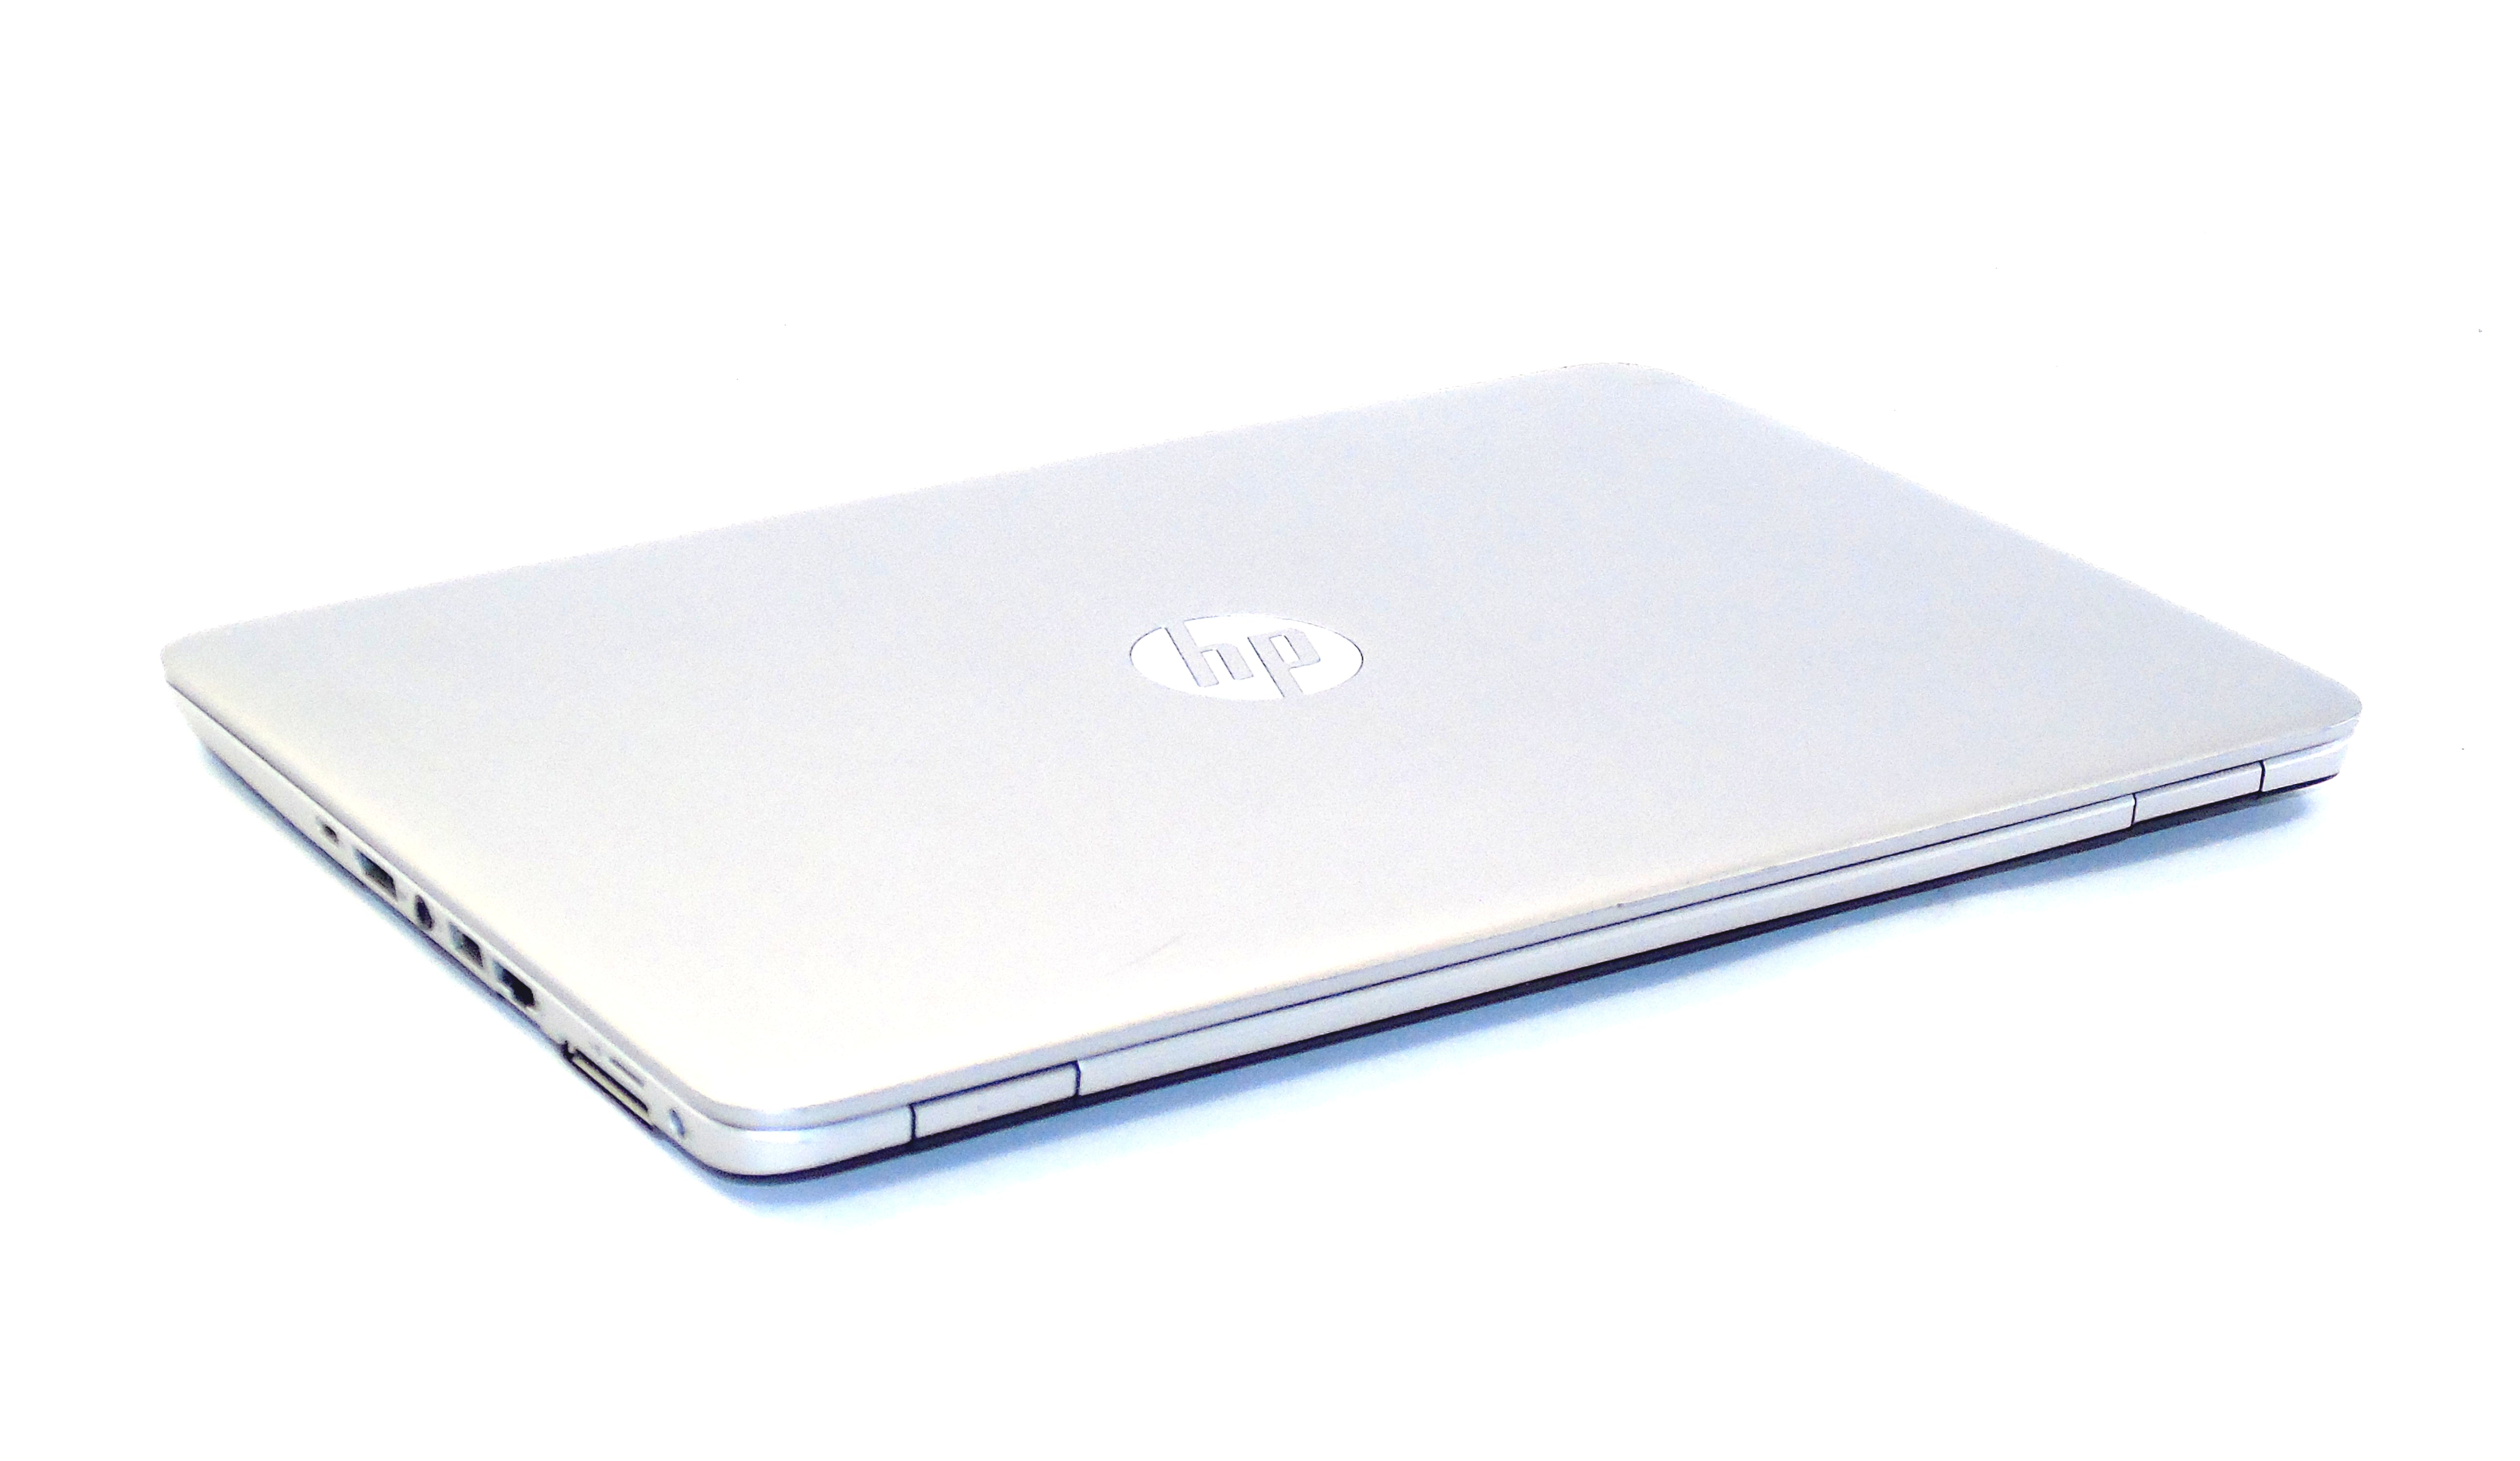 HP EliteBook 840 G4 Laptop, 13.9" i7 7th Gen, 8GB RAM, 256GB SSD, Windows 11